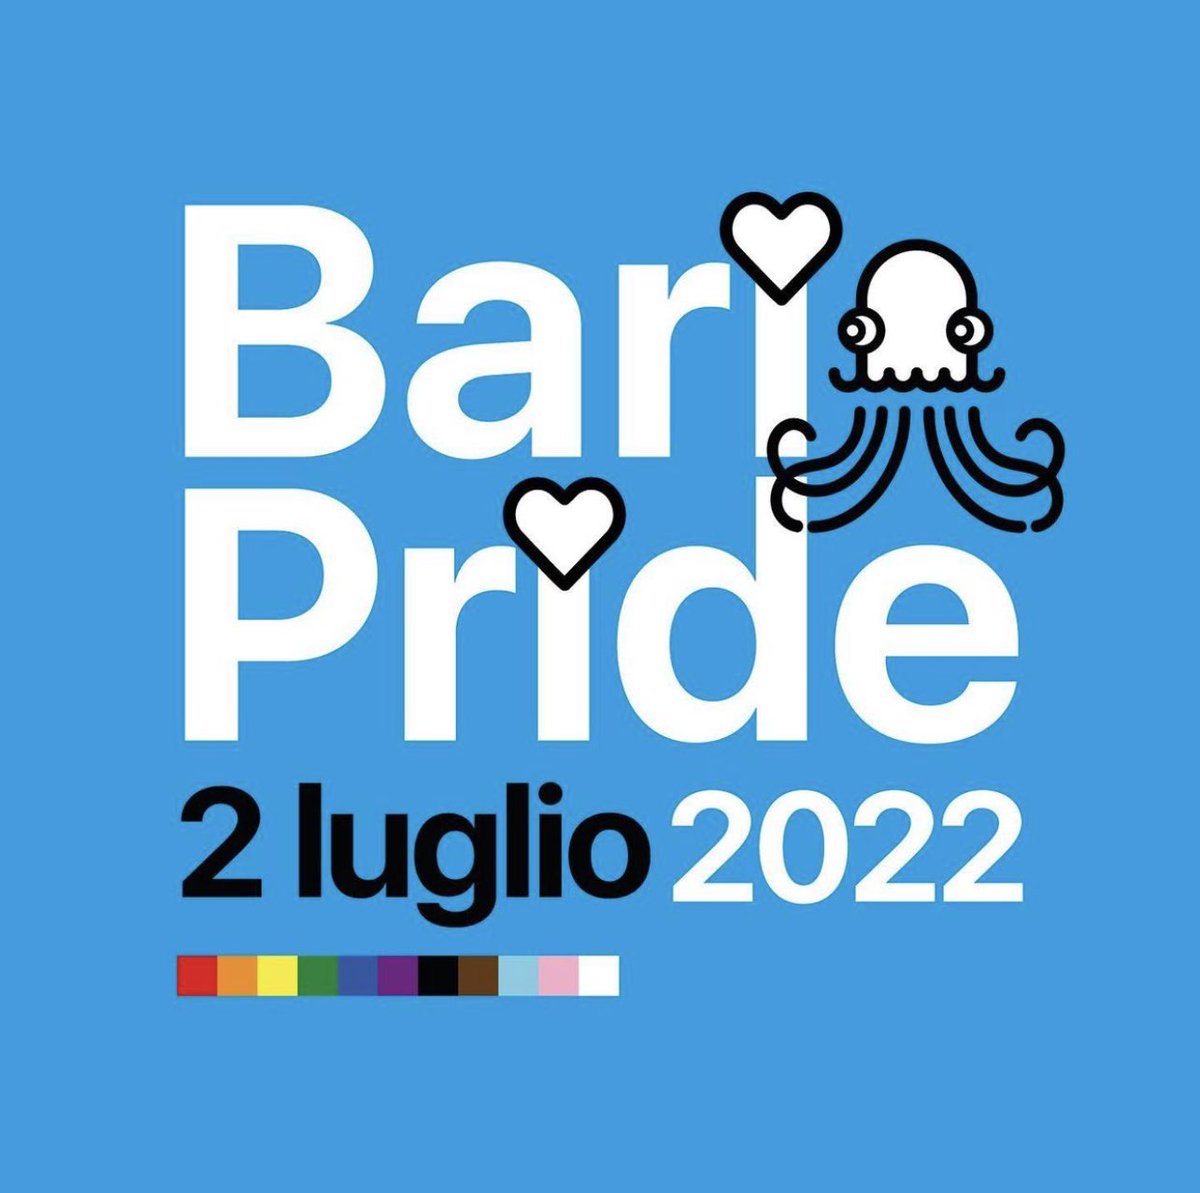 #BariPride | 2 luglio | siete prontə?🌈
#ondapride #pride #prideitalia #orgoglioLGBT #Pride2022 #Bari